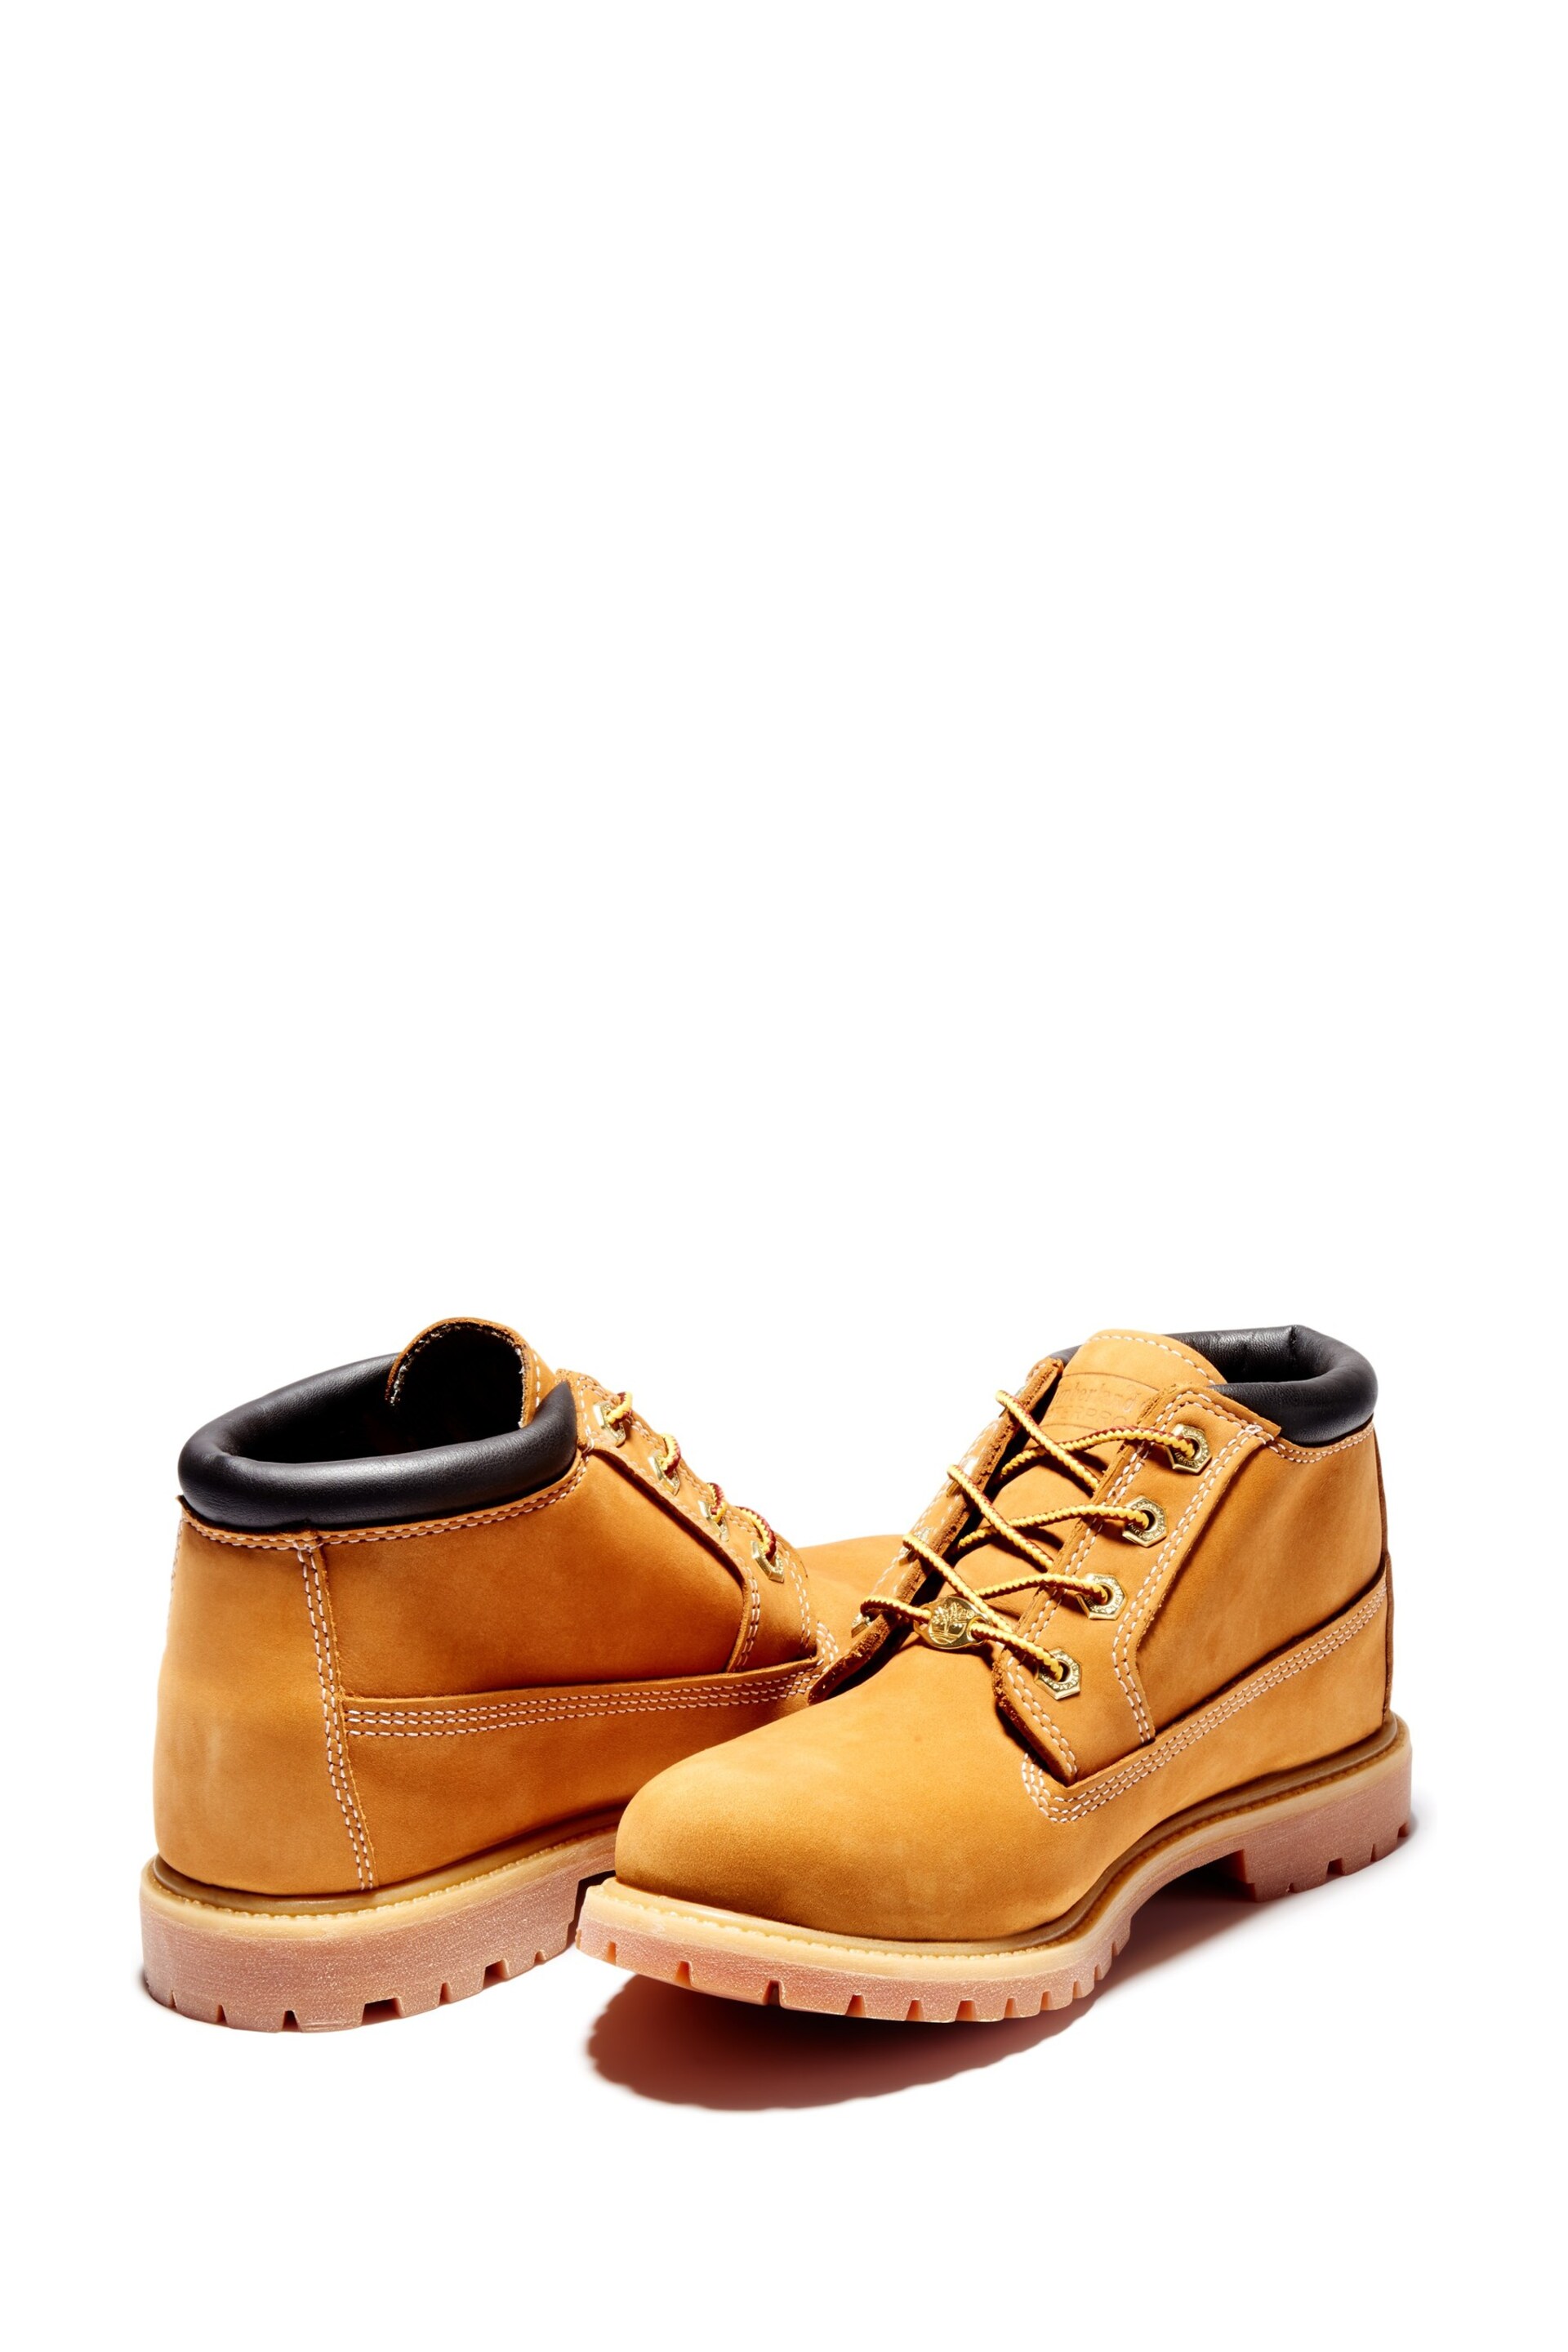 Timberland® Nellie Chukka Boots - Image 2 of 5